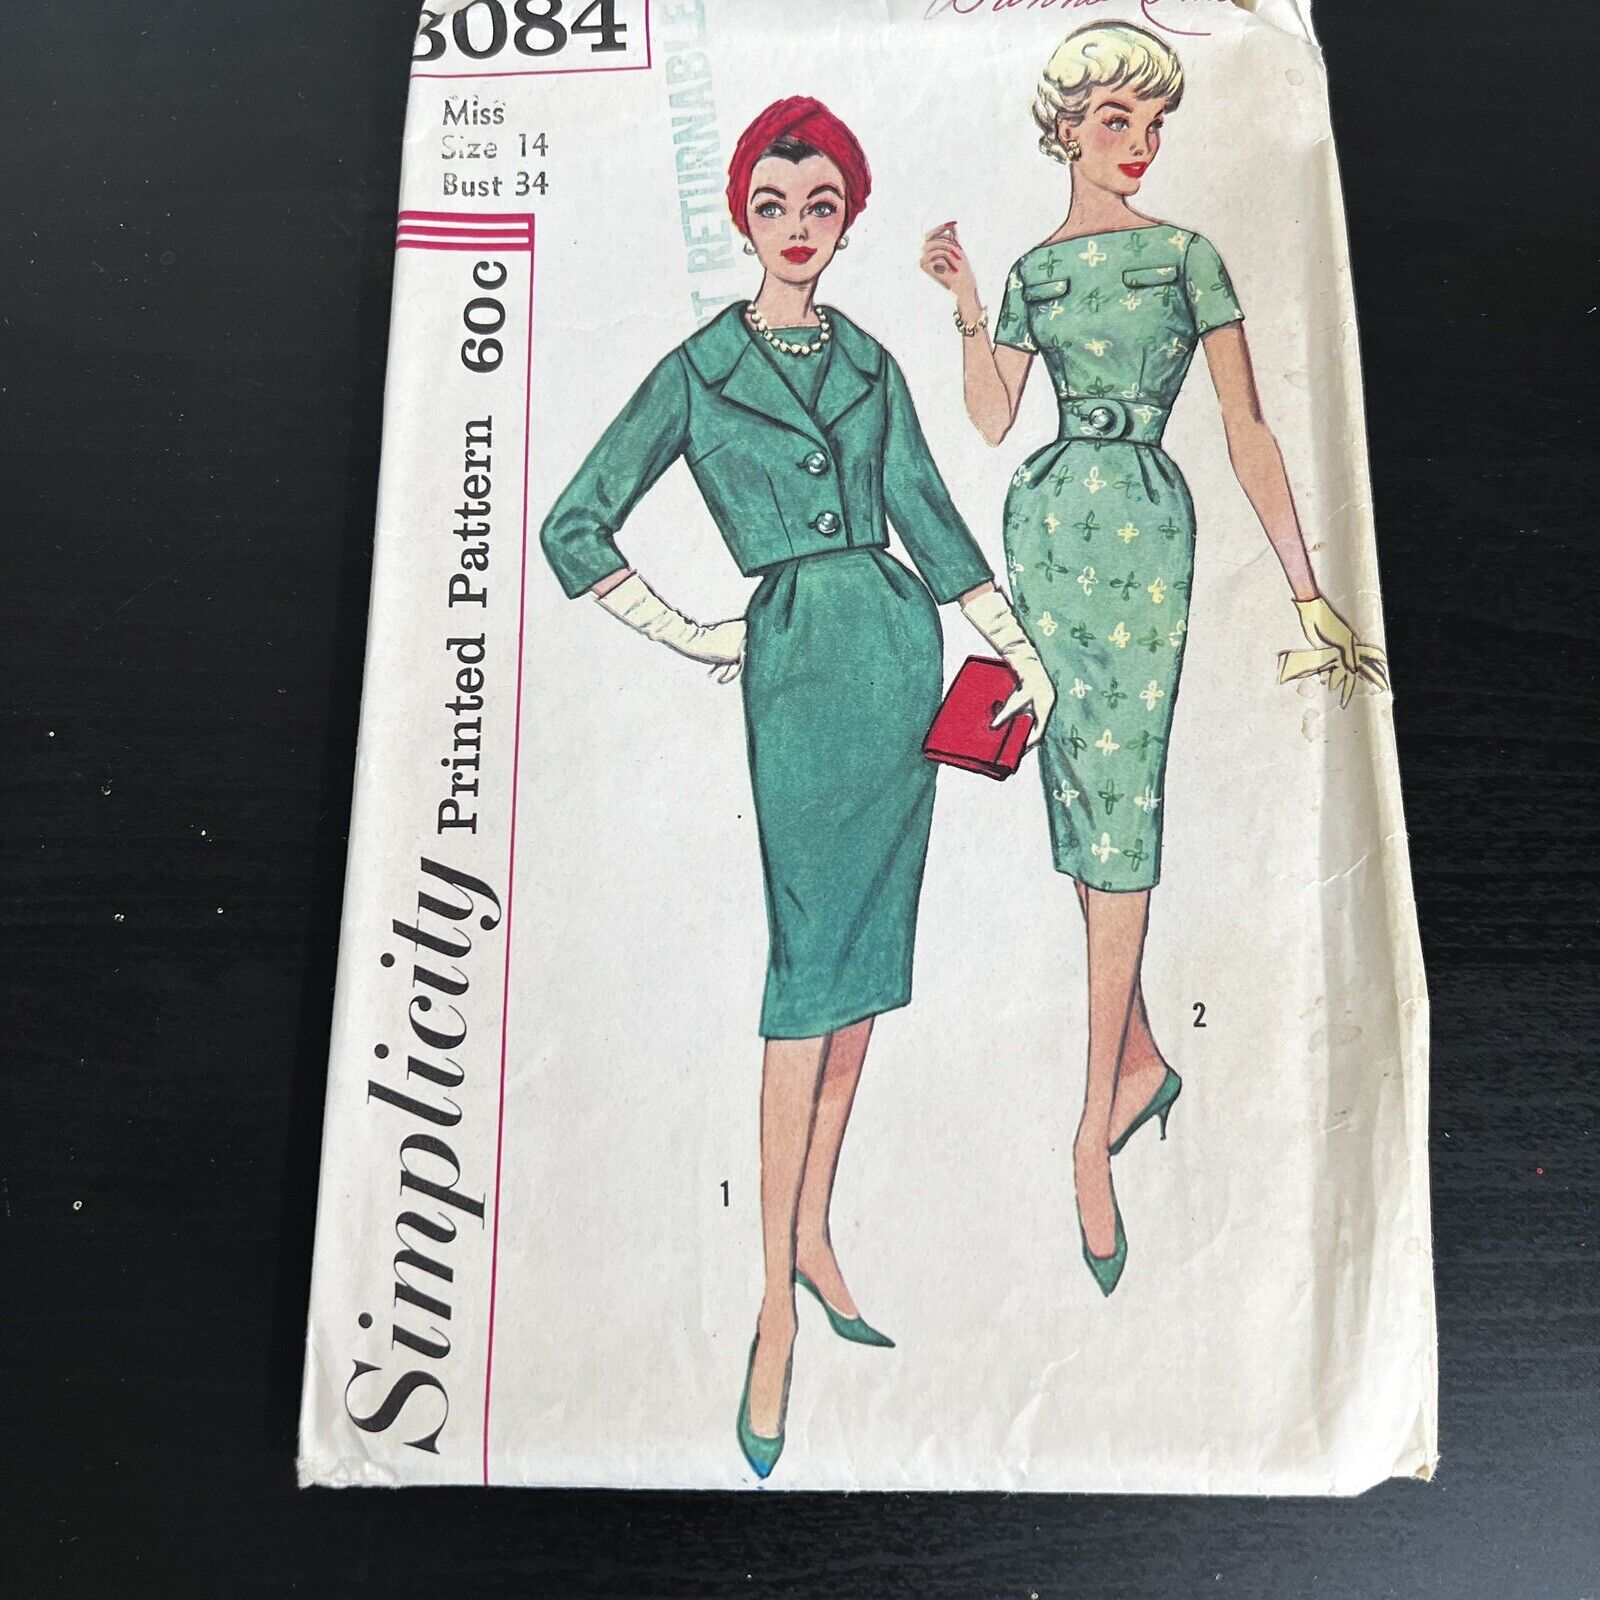 Vintage 1950s Simplicity 3084 Bateau Neck Dress + Jacket Sewing Pattern 14 CUT